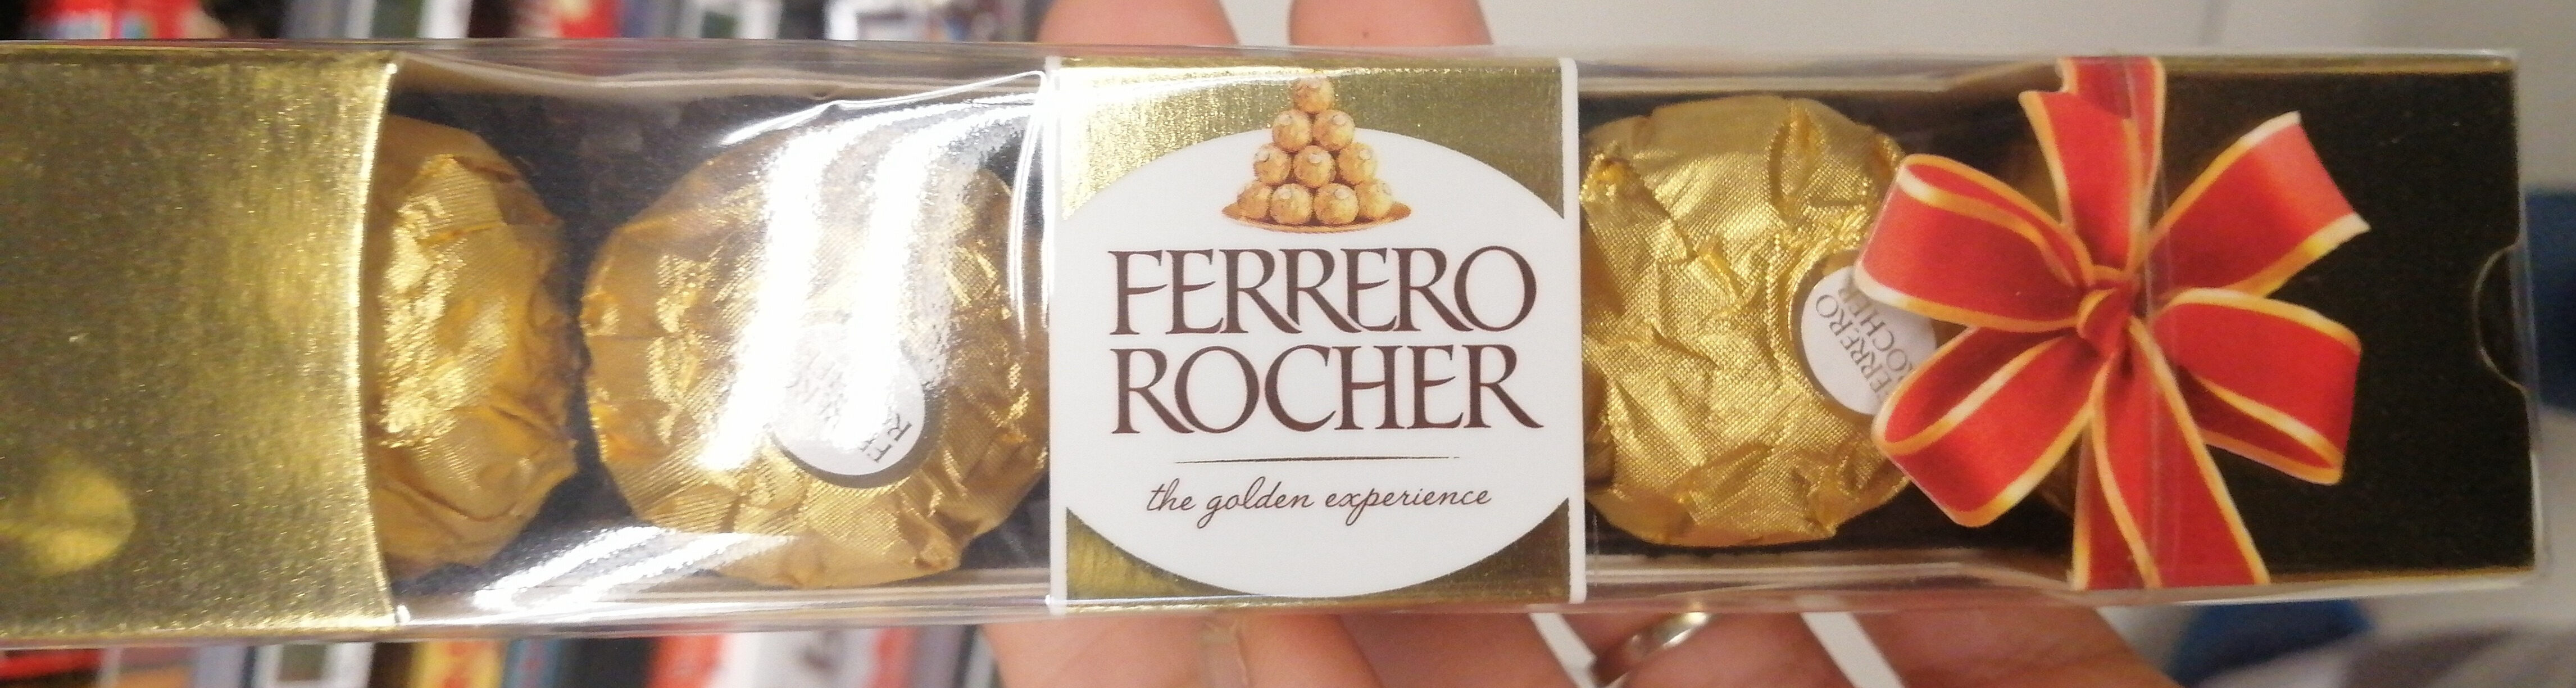 Ferrero Rocher T5 - Product